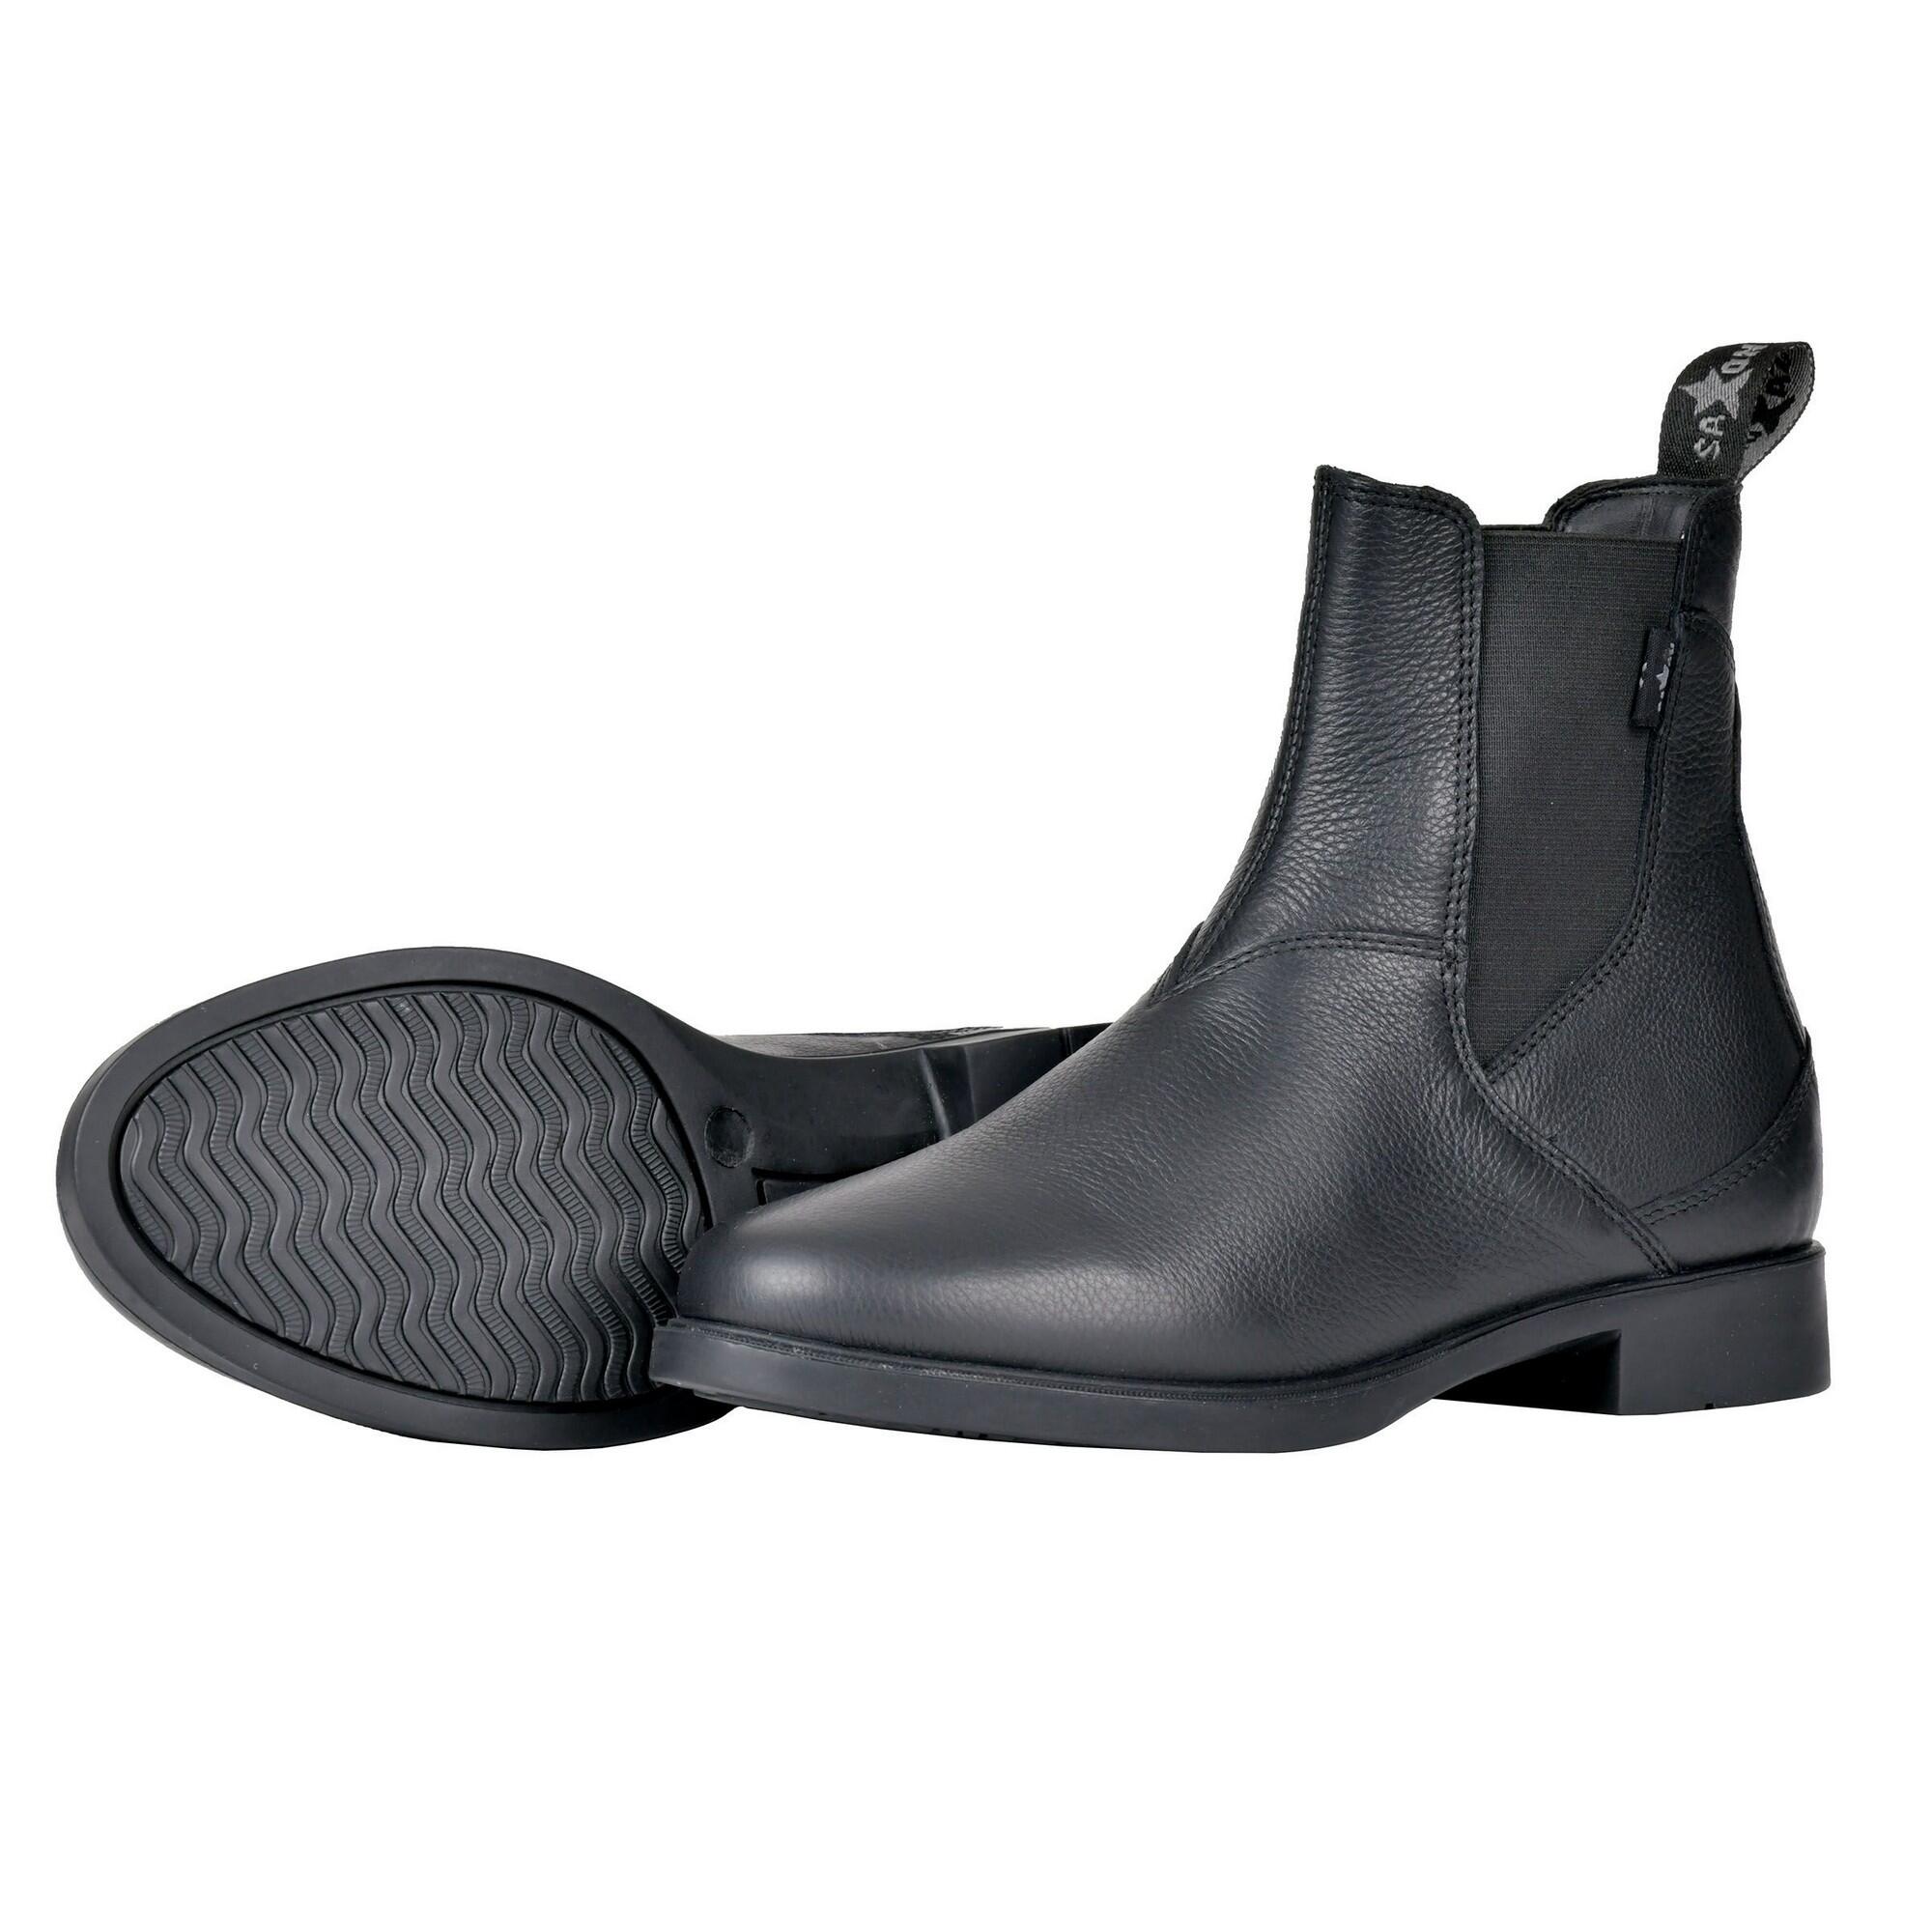 SAXON Unisex Adult Allyn Leather Jodhpur Boots (Black)